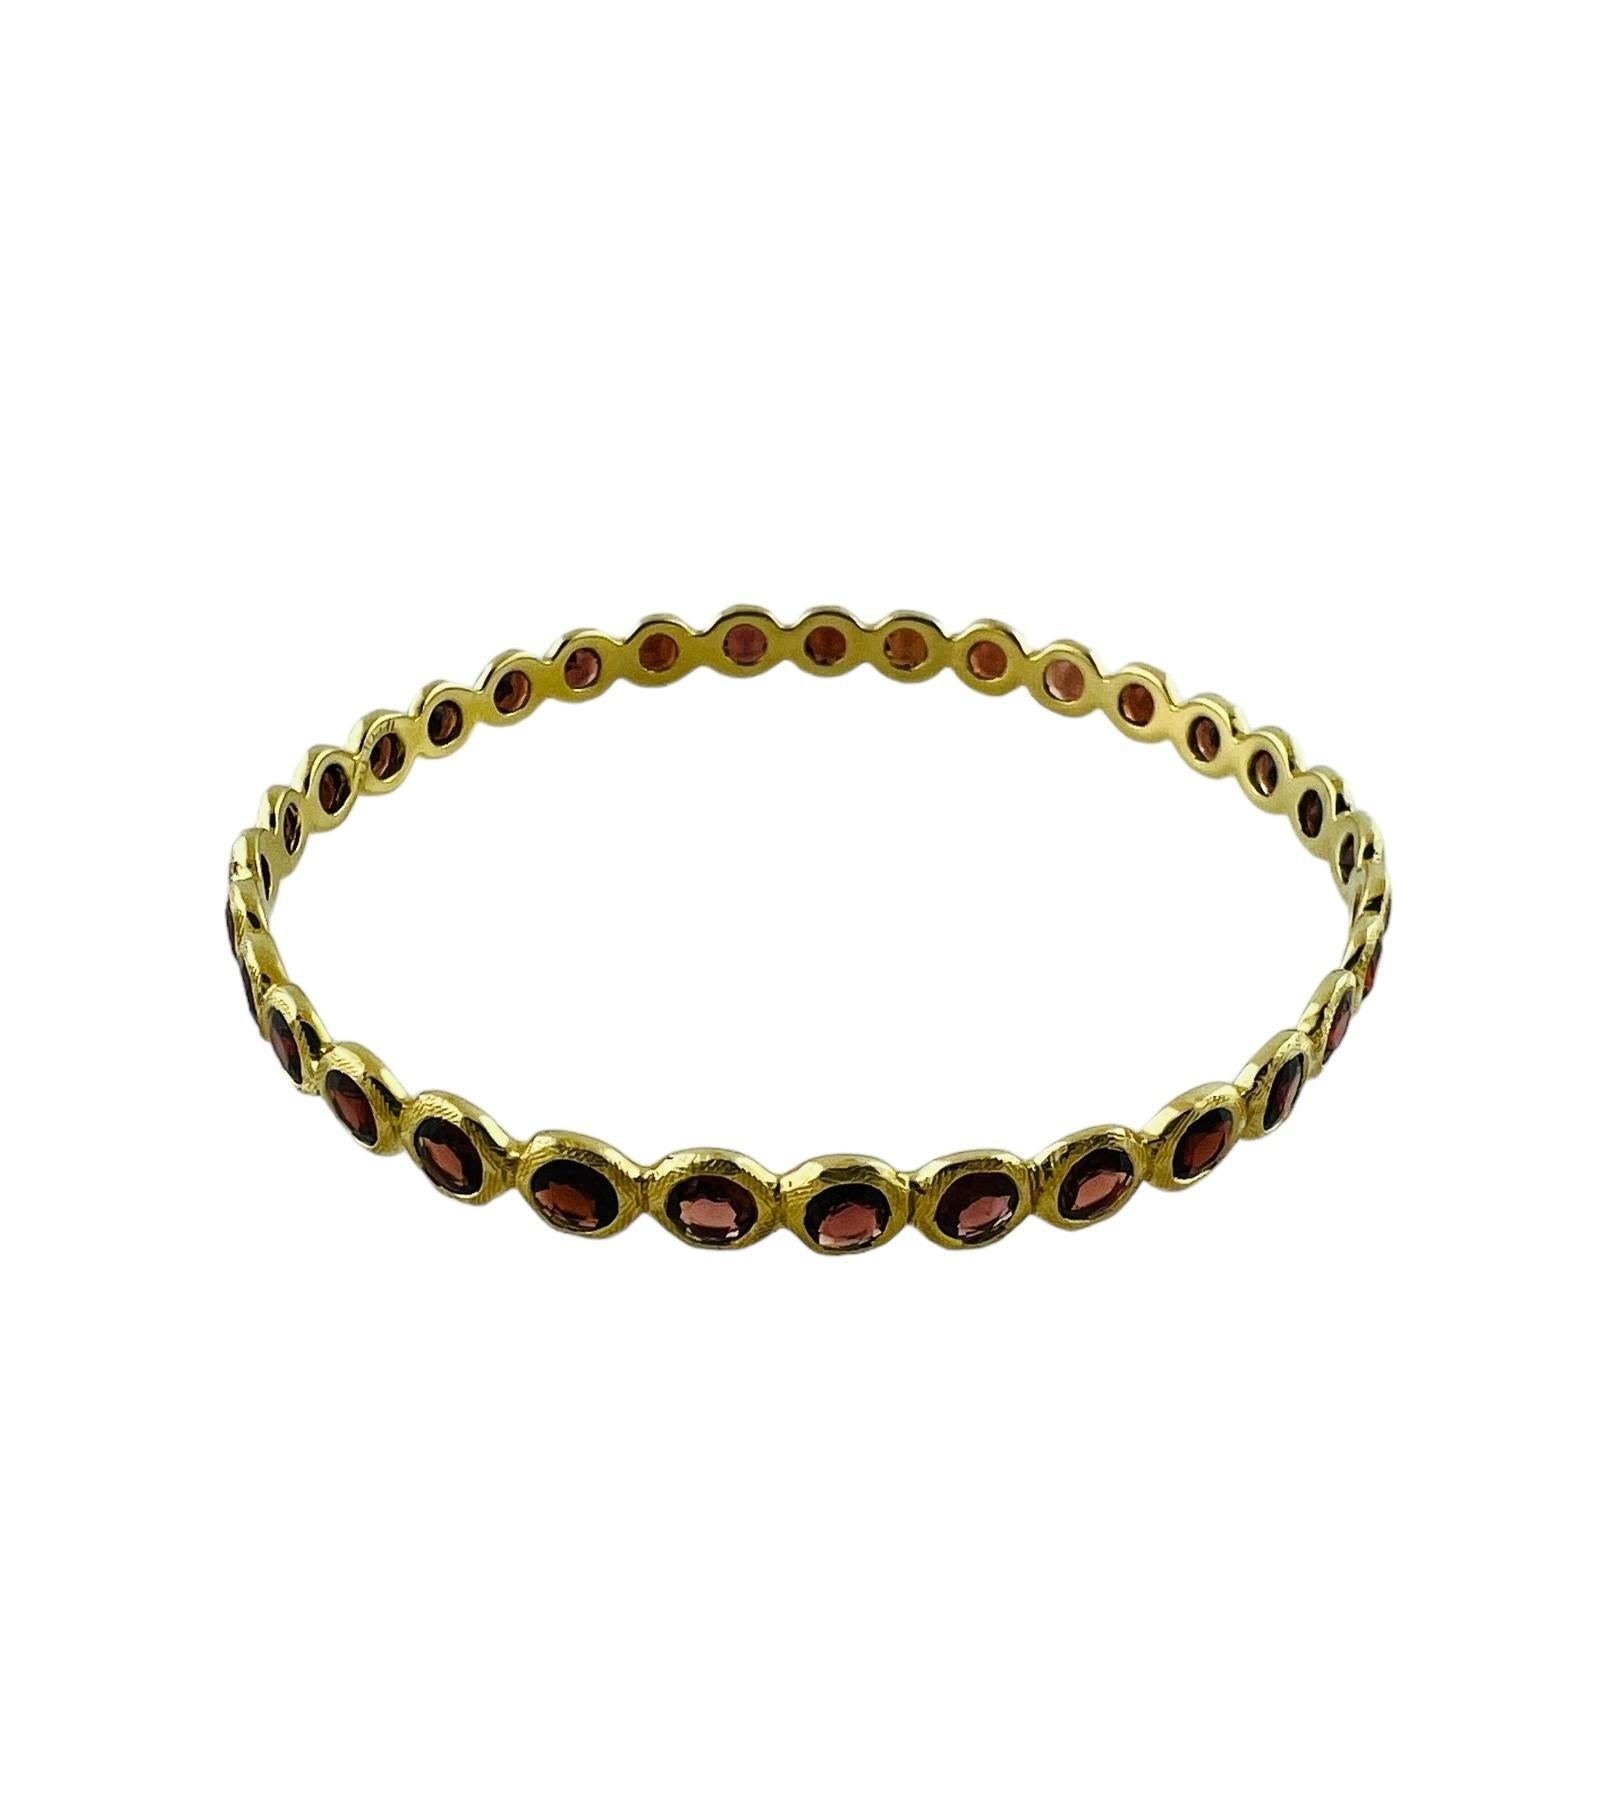 Ippolita 14K Yellow Gold Garnet Bangle Bracelet

This beautiful Ippolita bracelet is bezel set with 33 garnet stones

Hammered finish

Bracelet is approx. 7 3/4